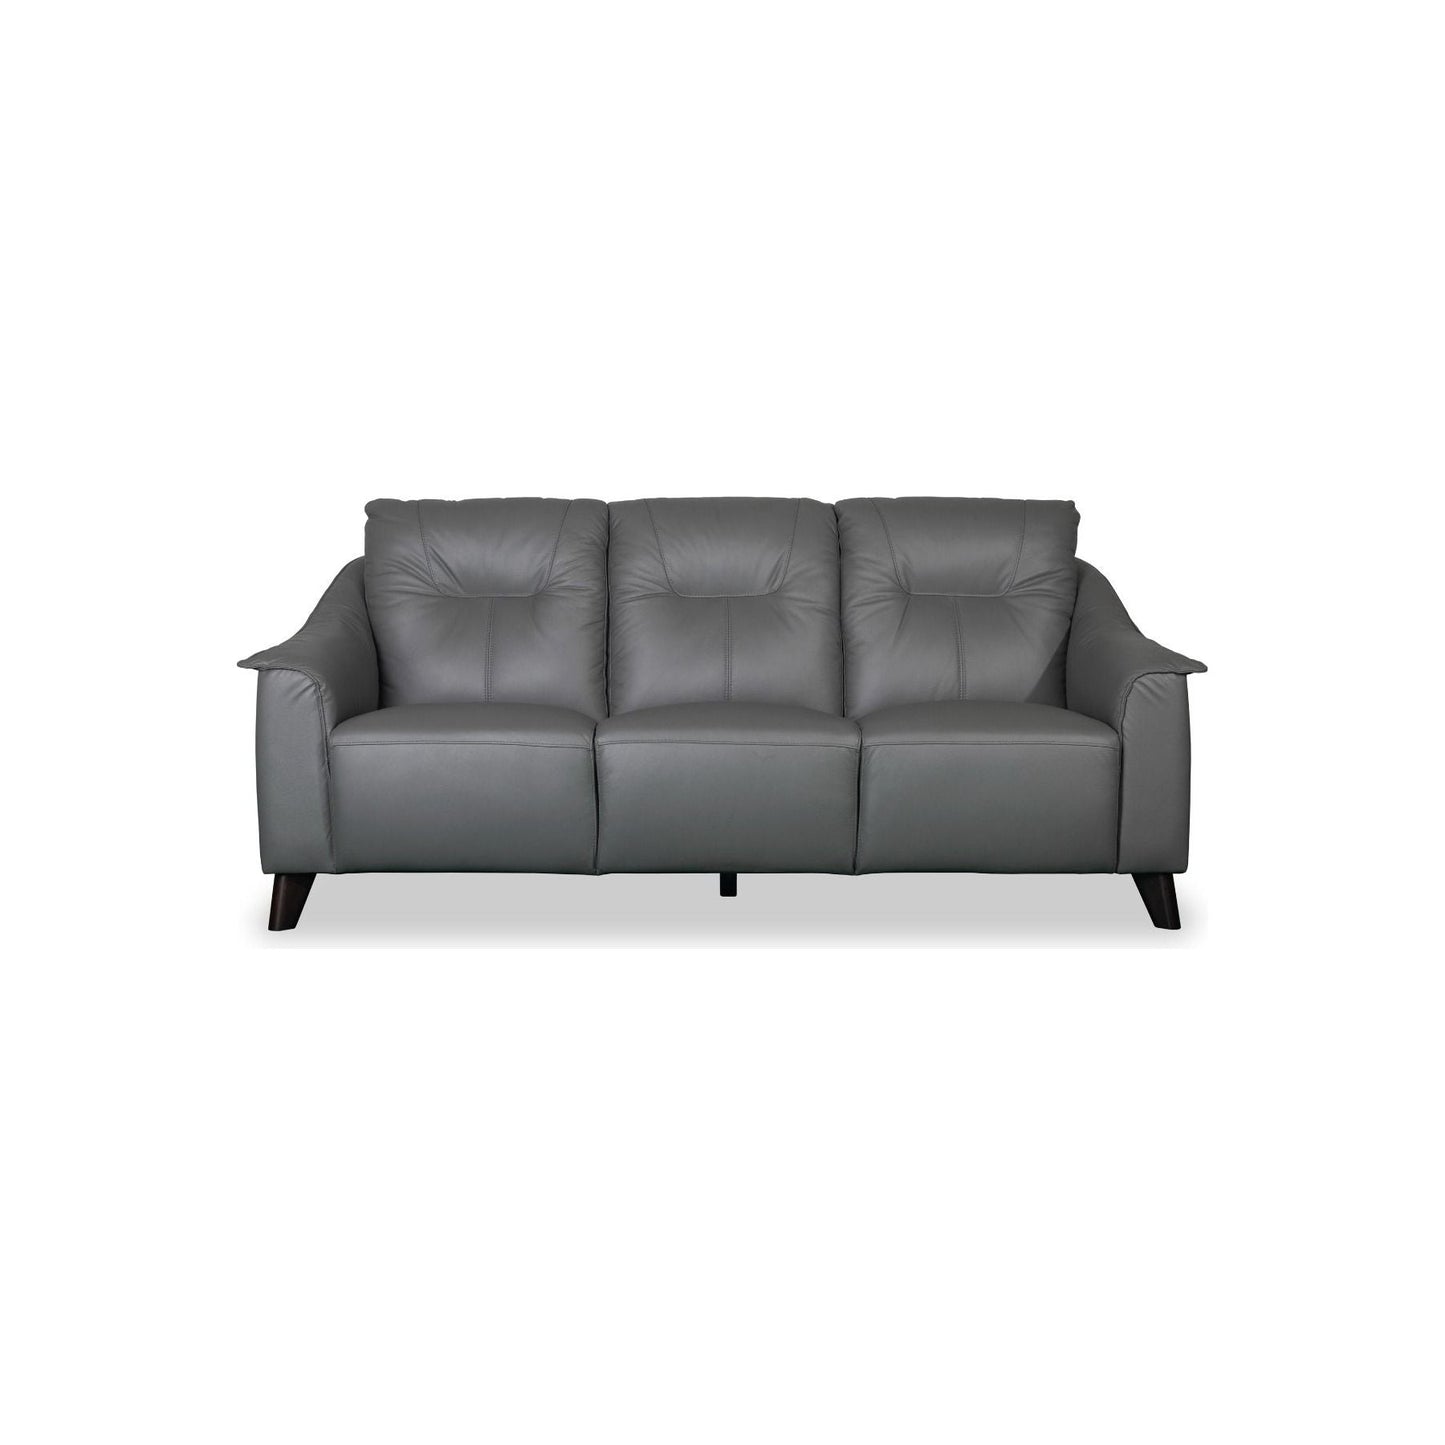 Ezra 3 Seater - Dark Grey Leather